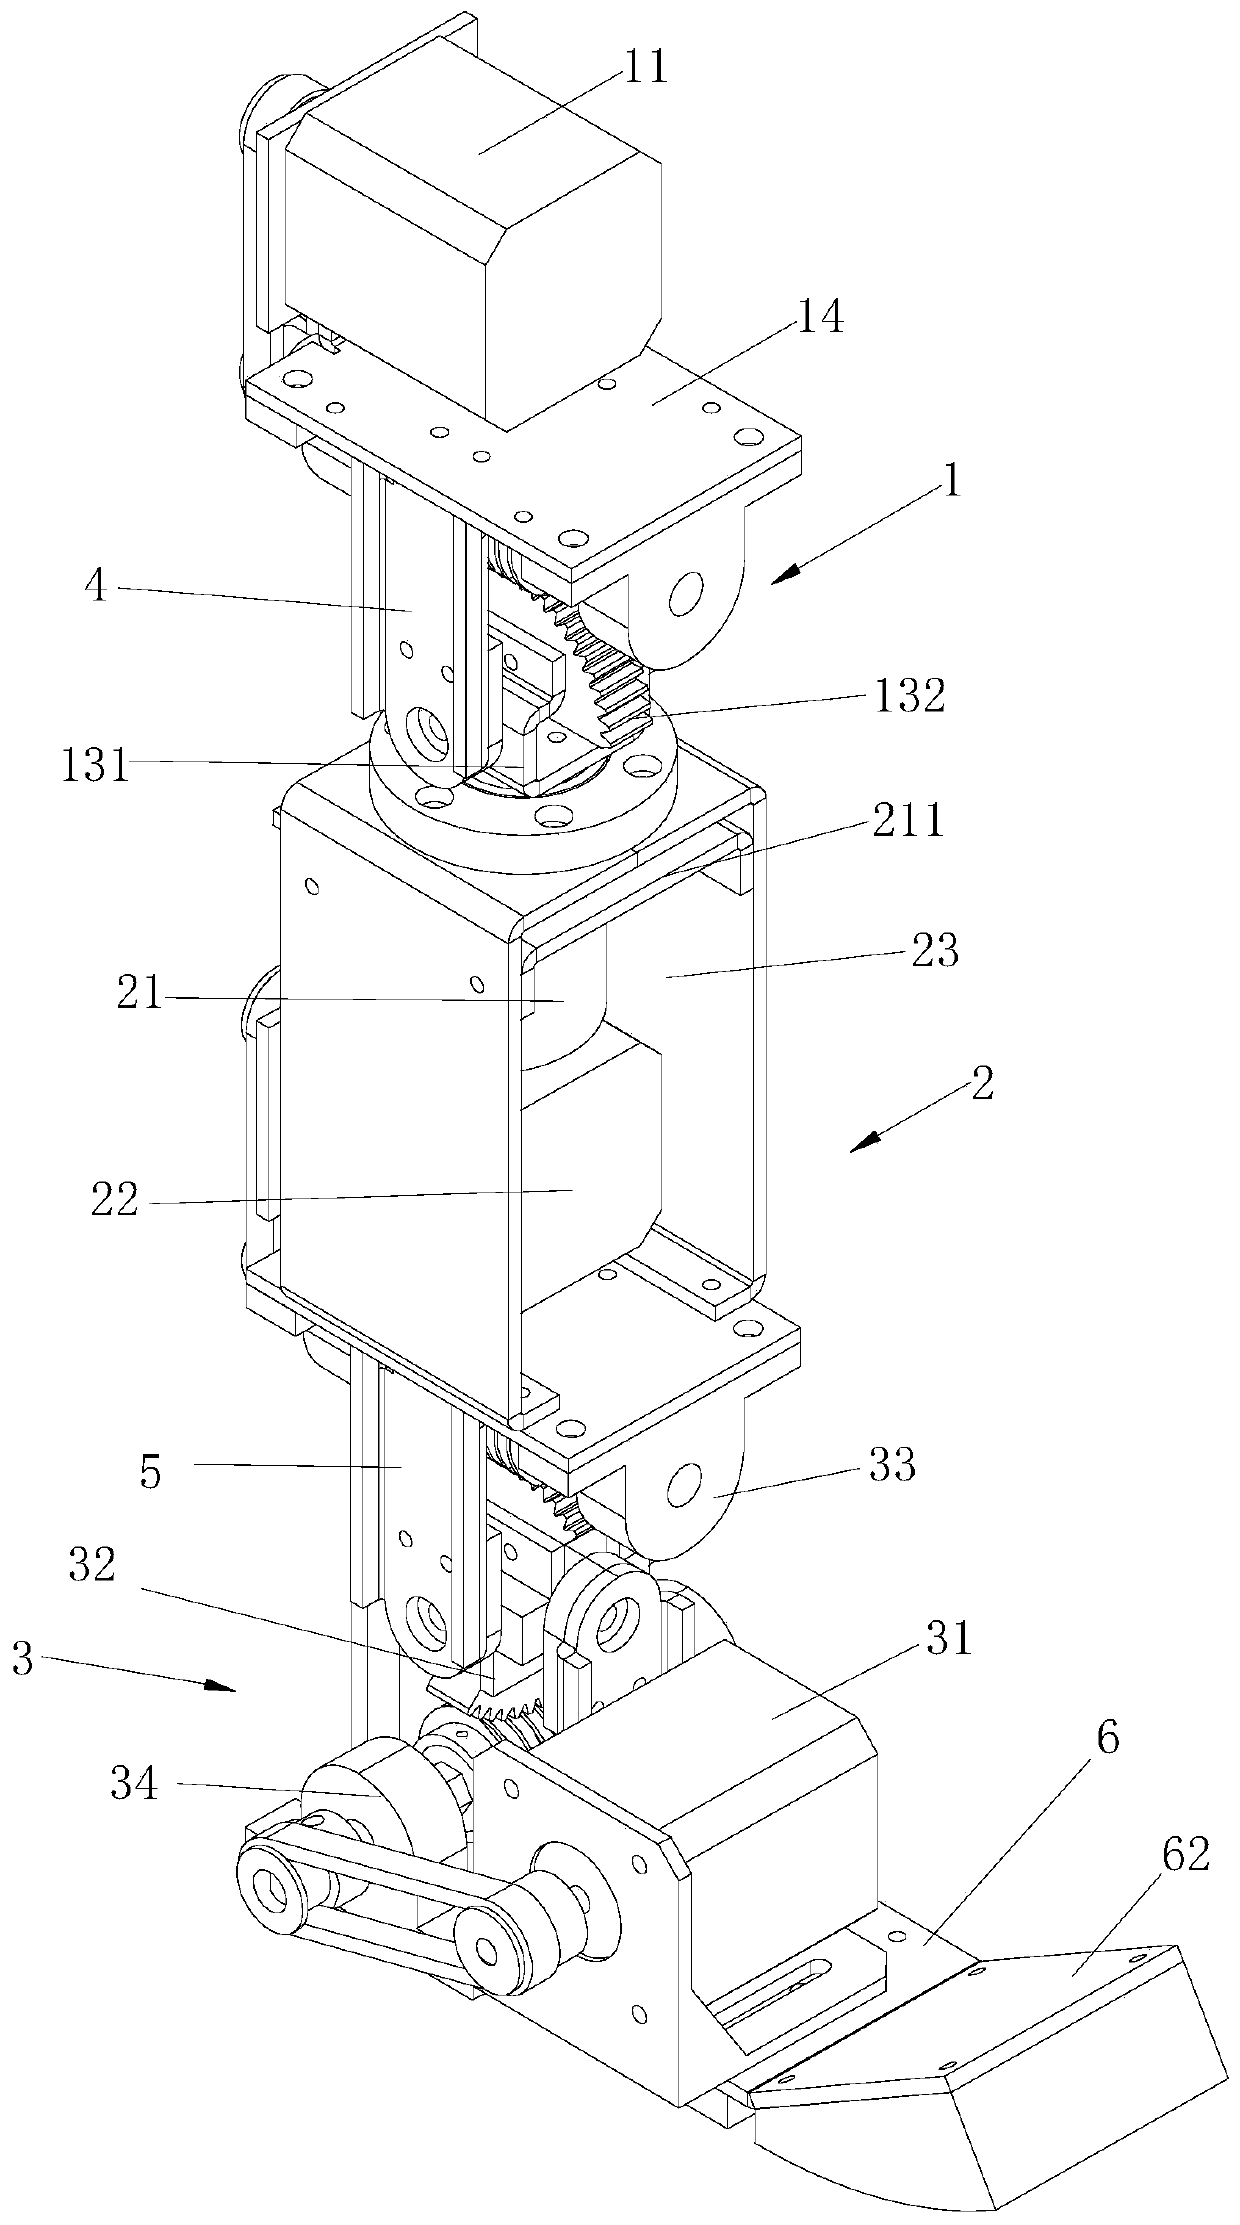 A Kinematically Precise Impact-Resistant Robotic Leg Apparatus